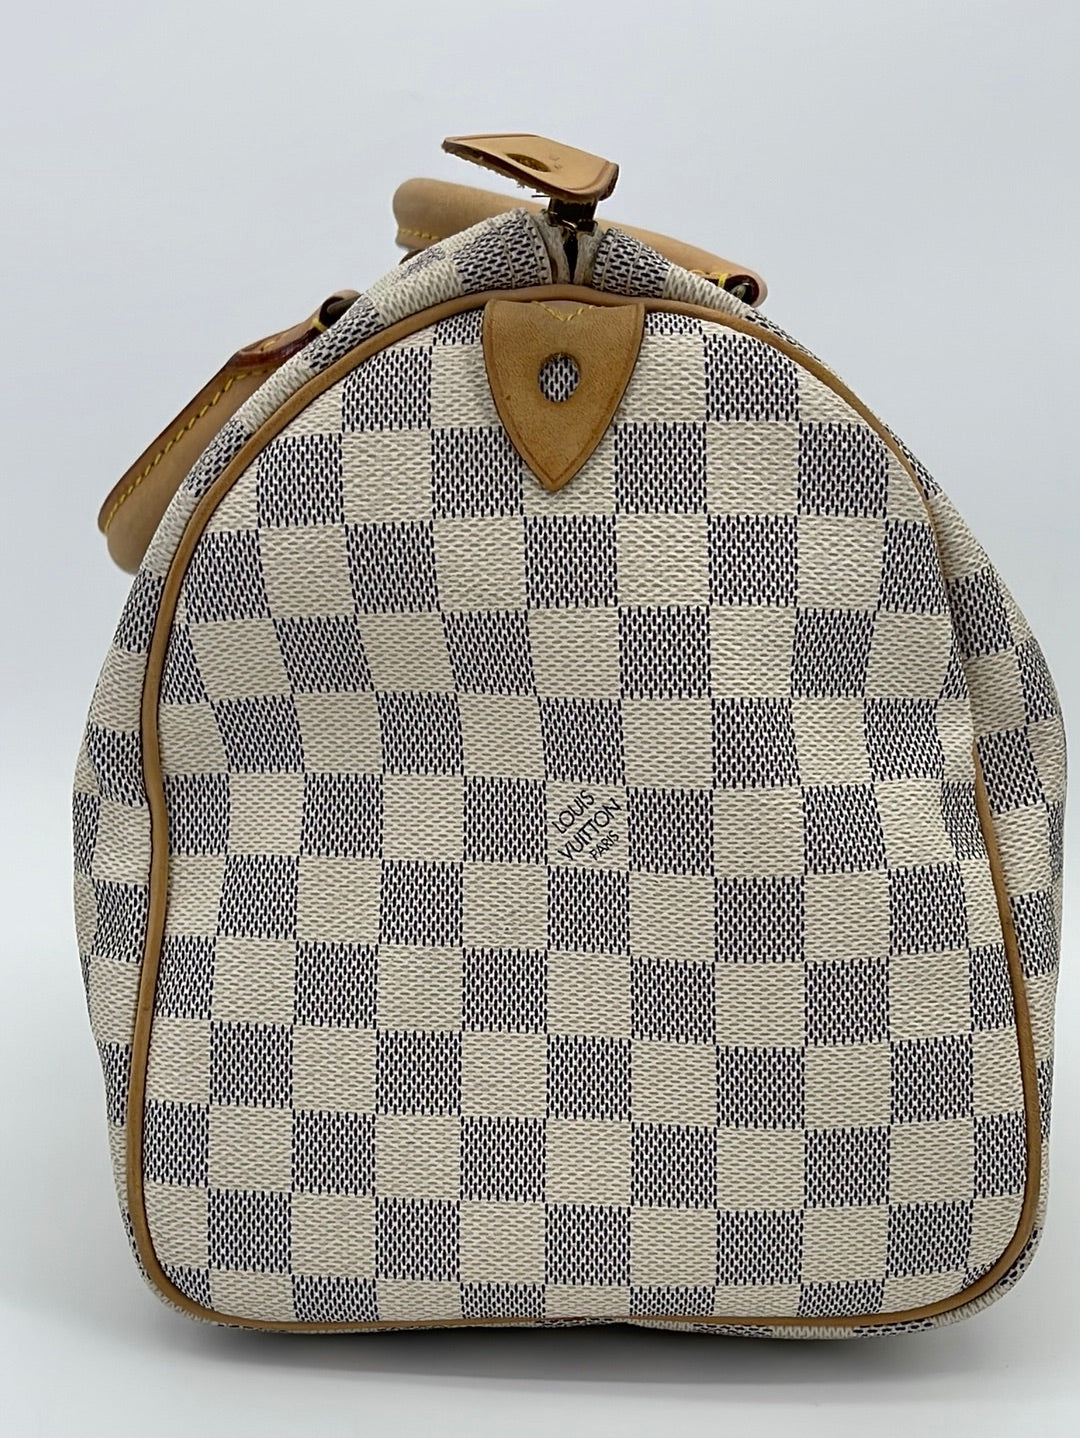 Louis Vuitton Speedy 35 Damier Azur Monogram BAG Tote Satchel with